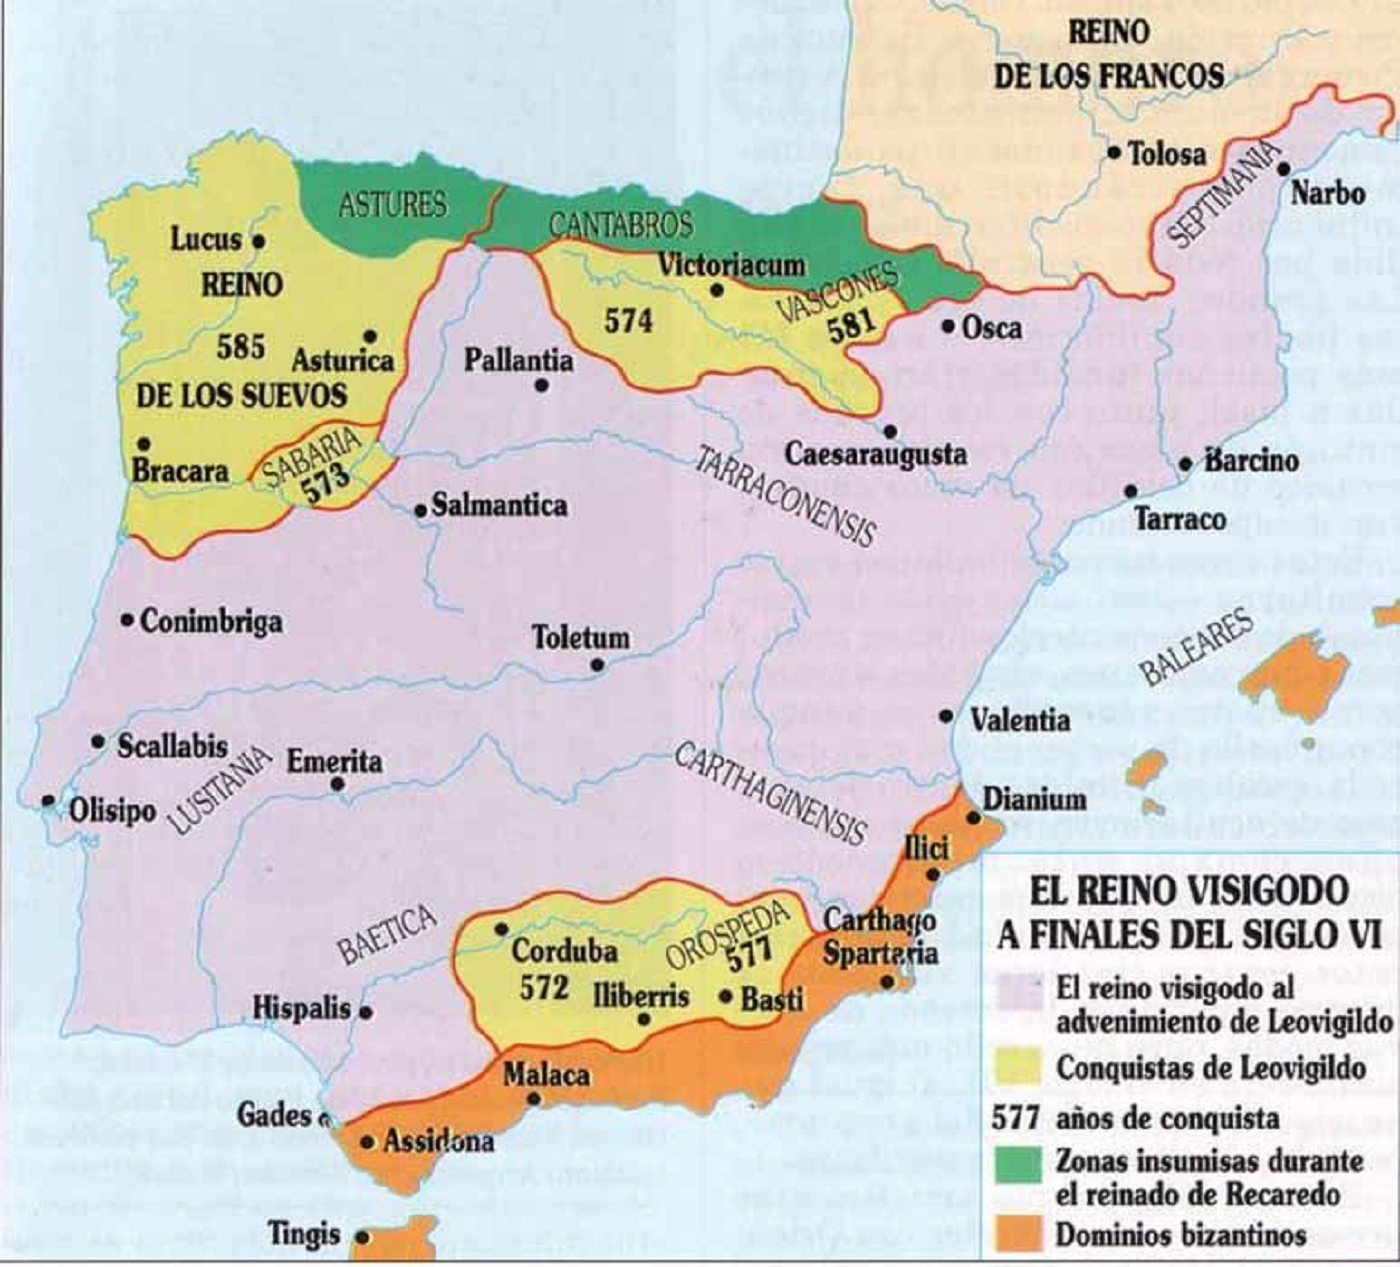 Batalla de Guadalete, inicio de la conquista ŕrab de la Península. Mapa de la península ibčrica, prevía a la Batalla de Guadalete. Fuente Wikimedia Commons